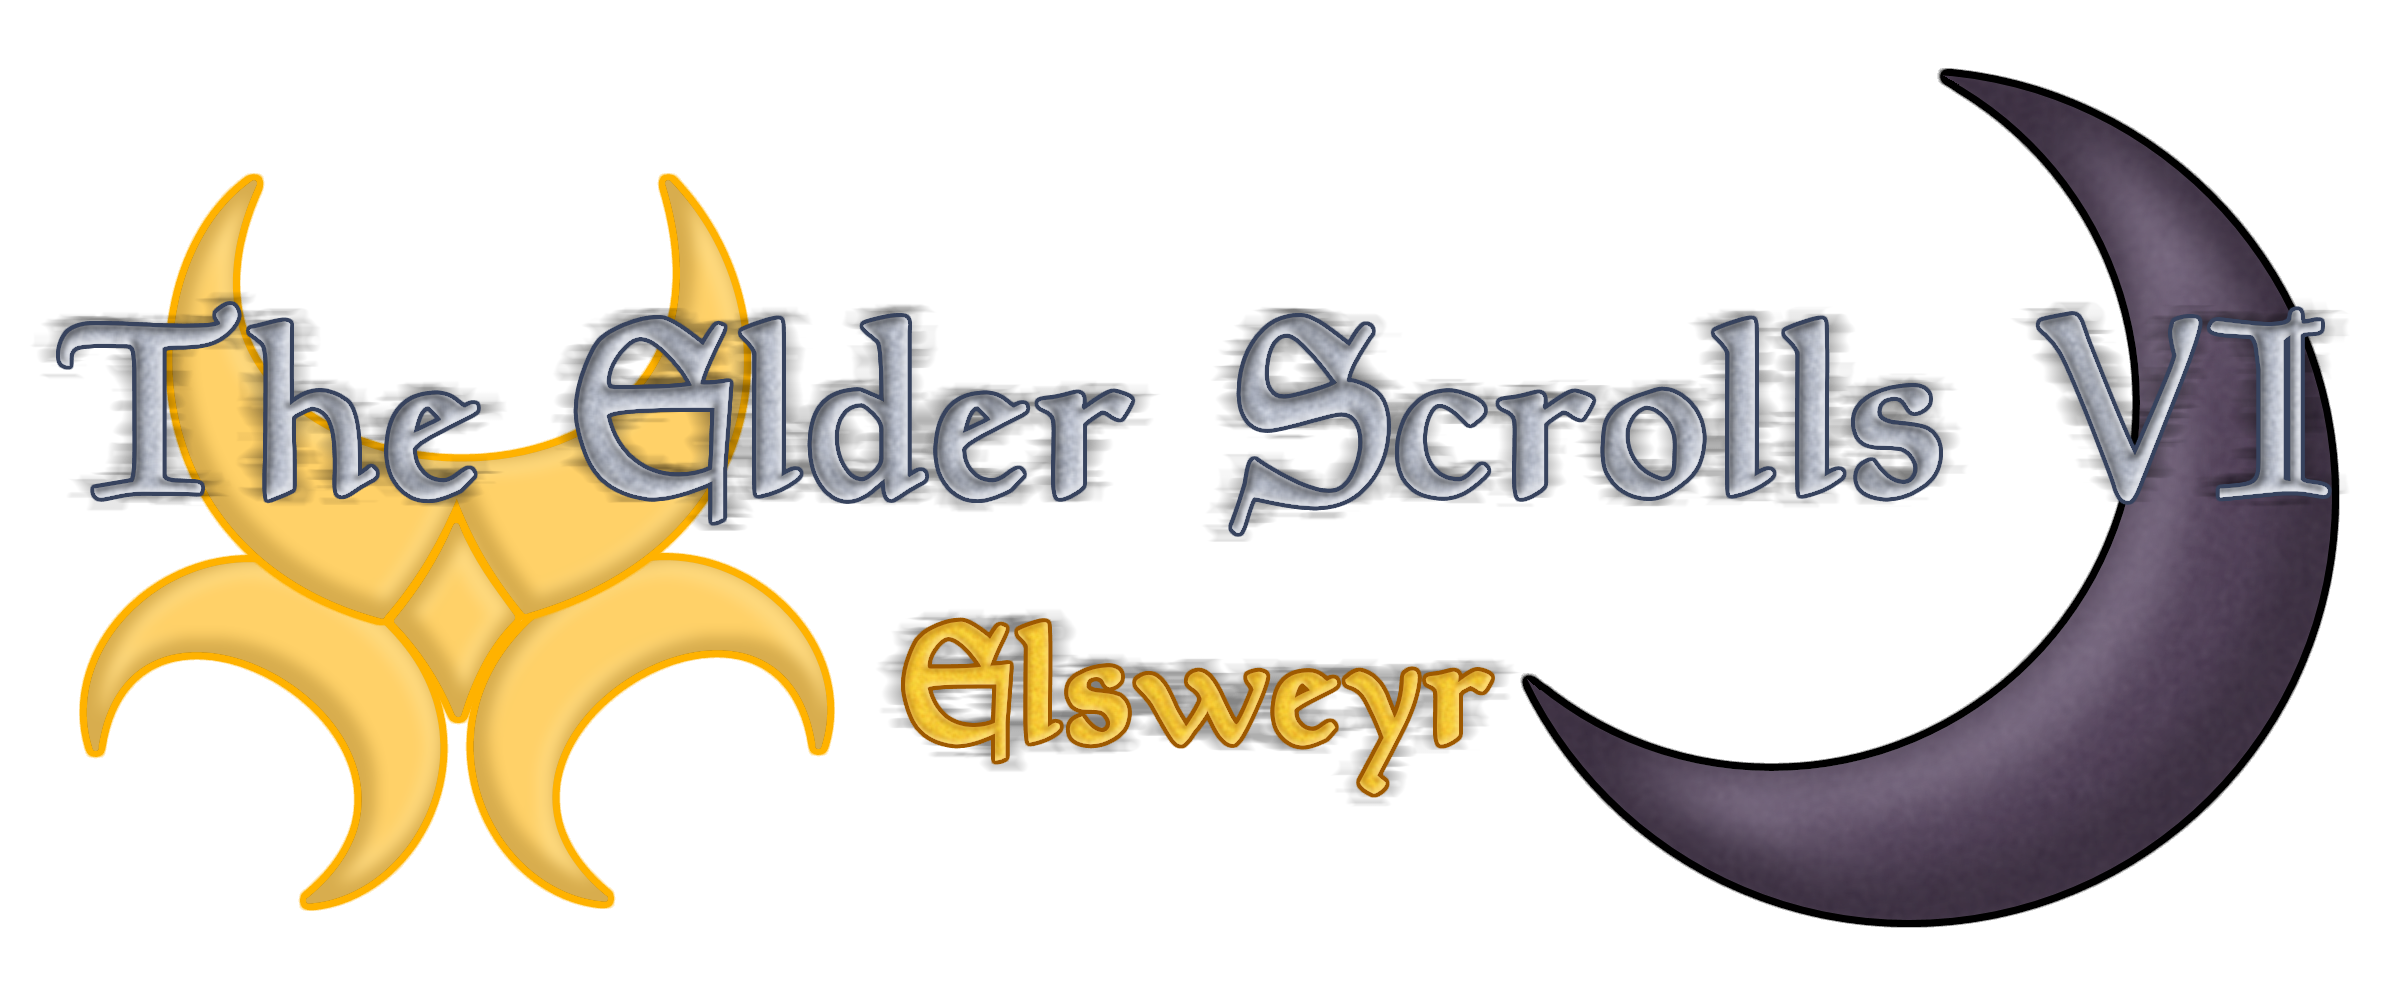 the elder scrolls vi discord